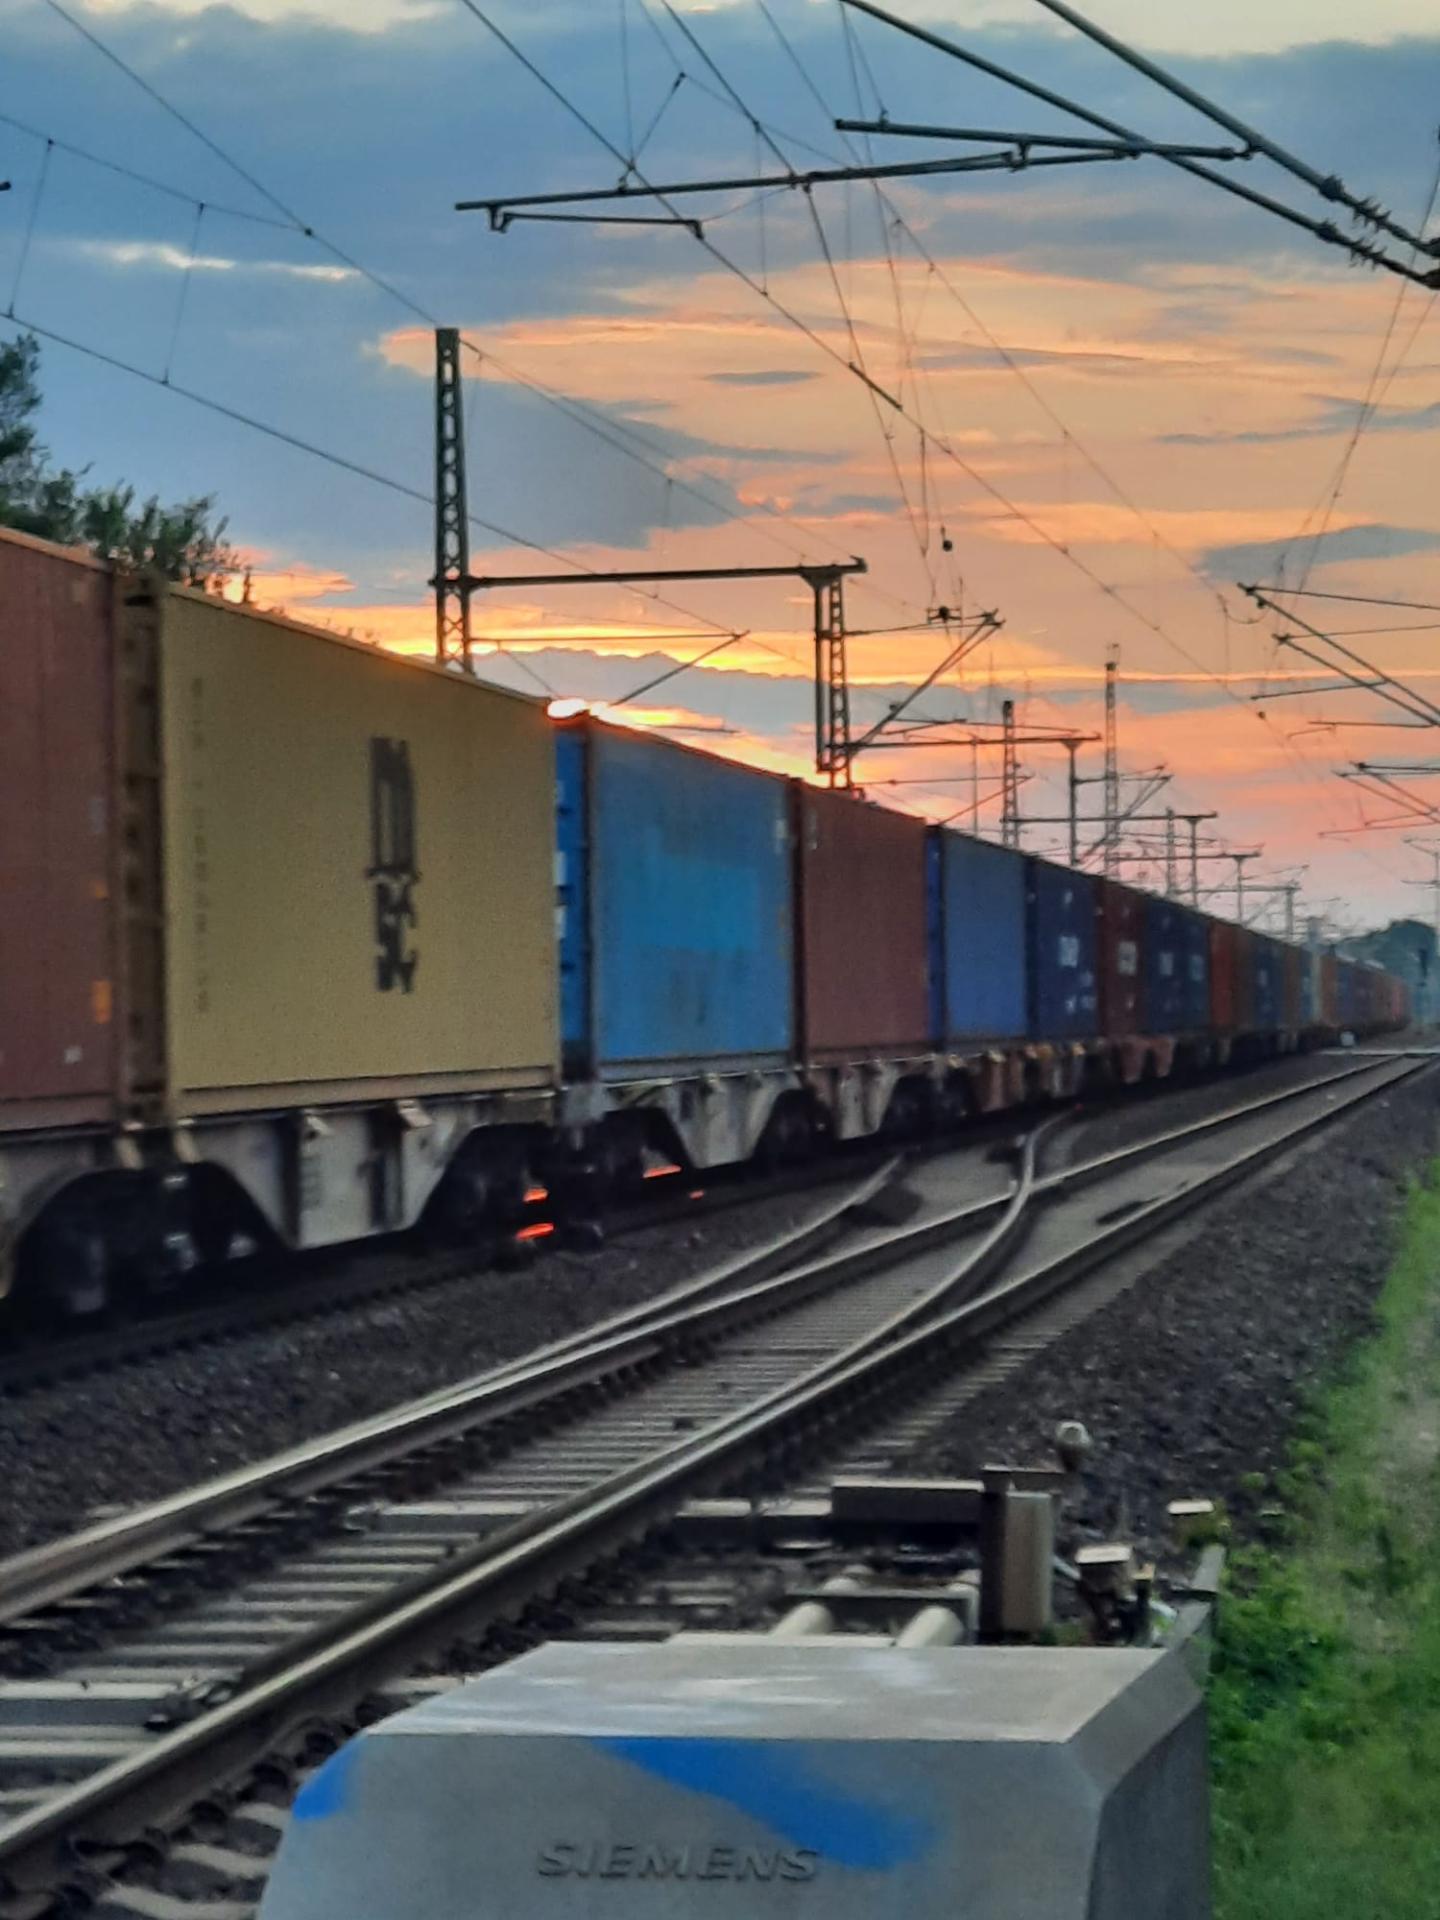 Güterverkehr mitdenken. Foto: Karen Ascher